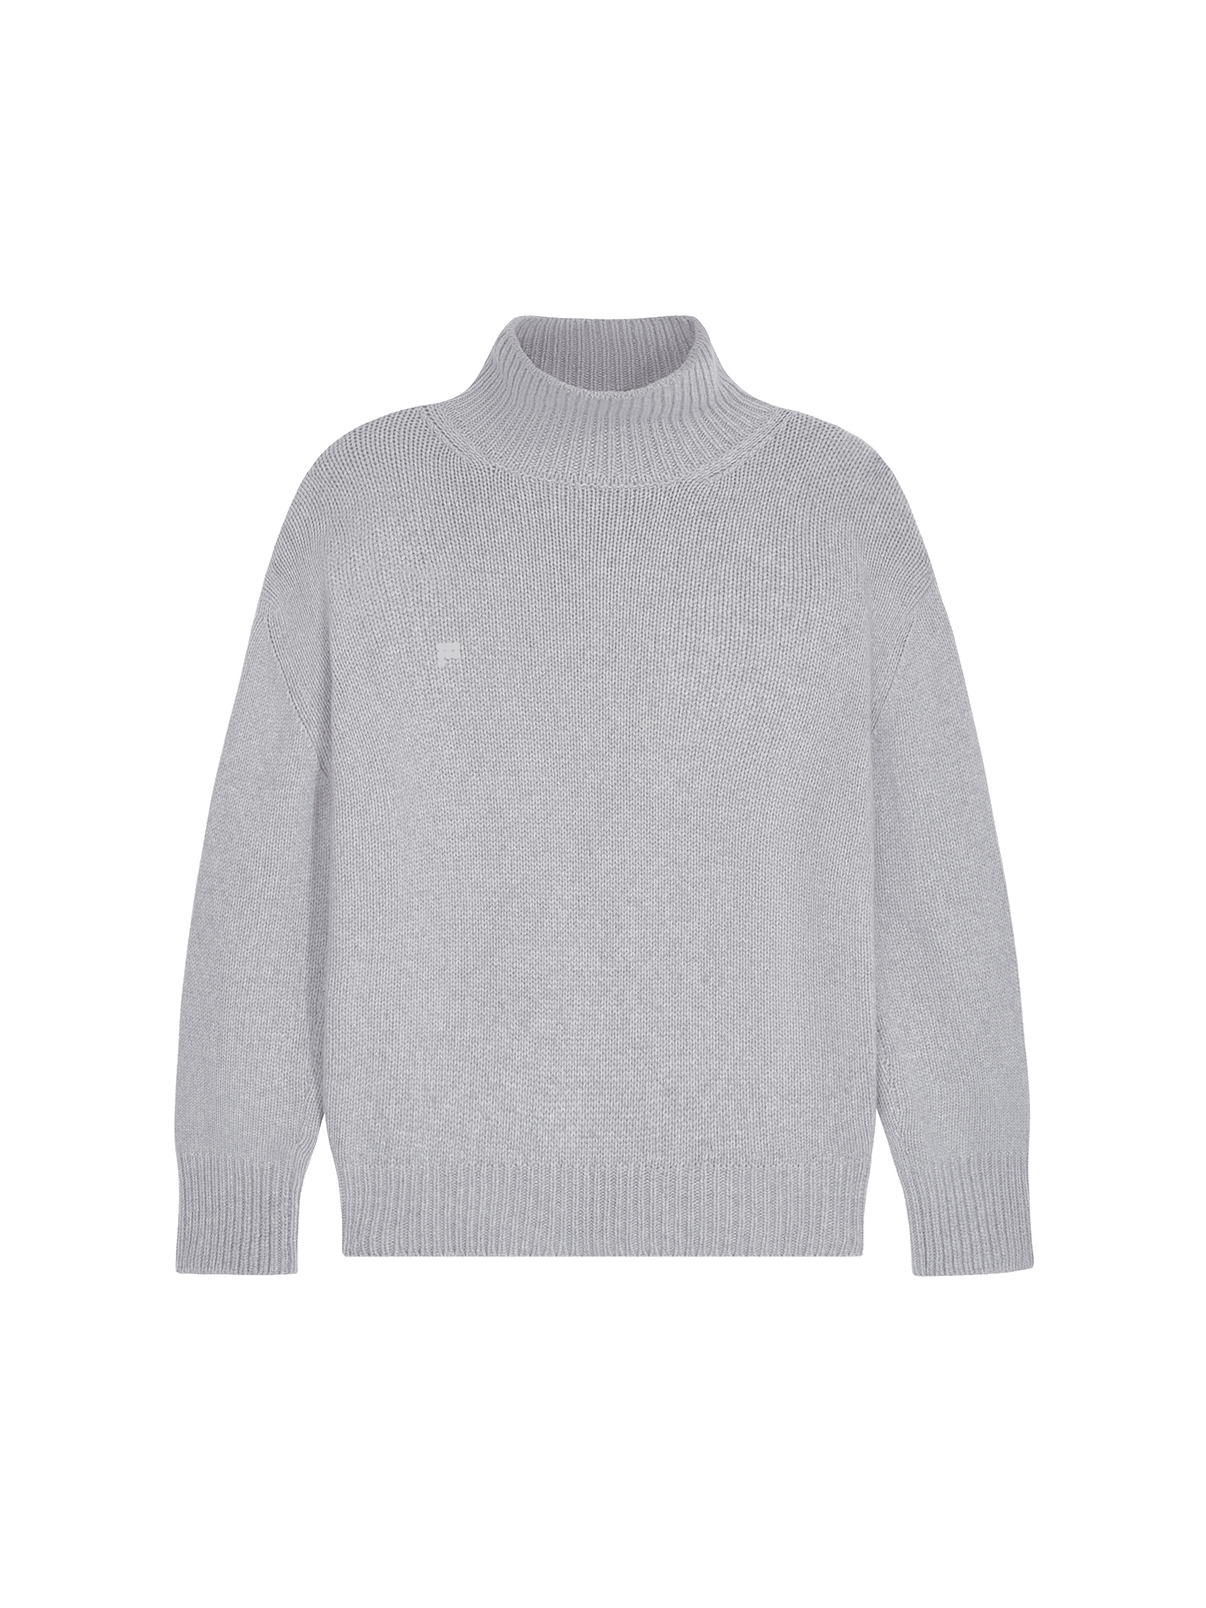 Men's Recycled Cashmere Turtleneck Sweater - Grey Marl - Pangaia